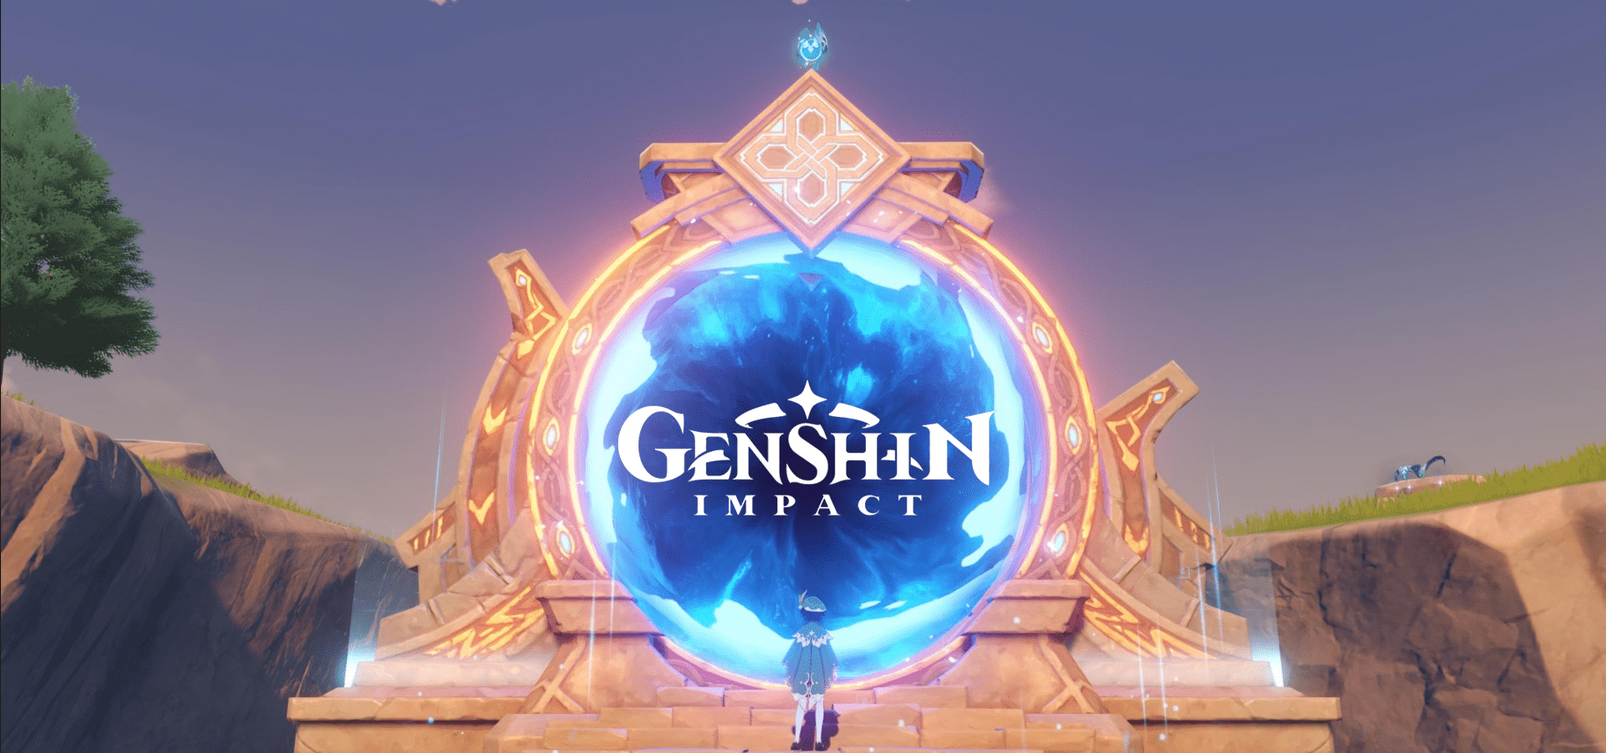 Genshin IMpact 2.6 Spiral Abyss leak